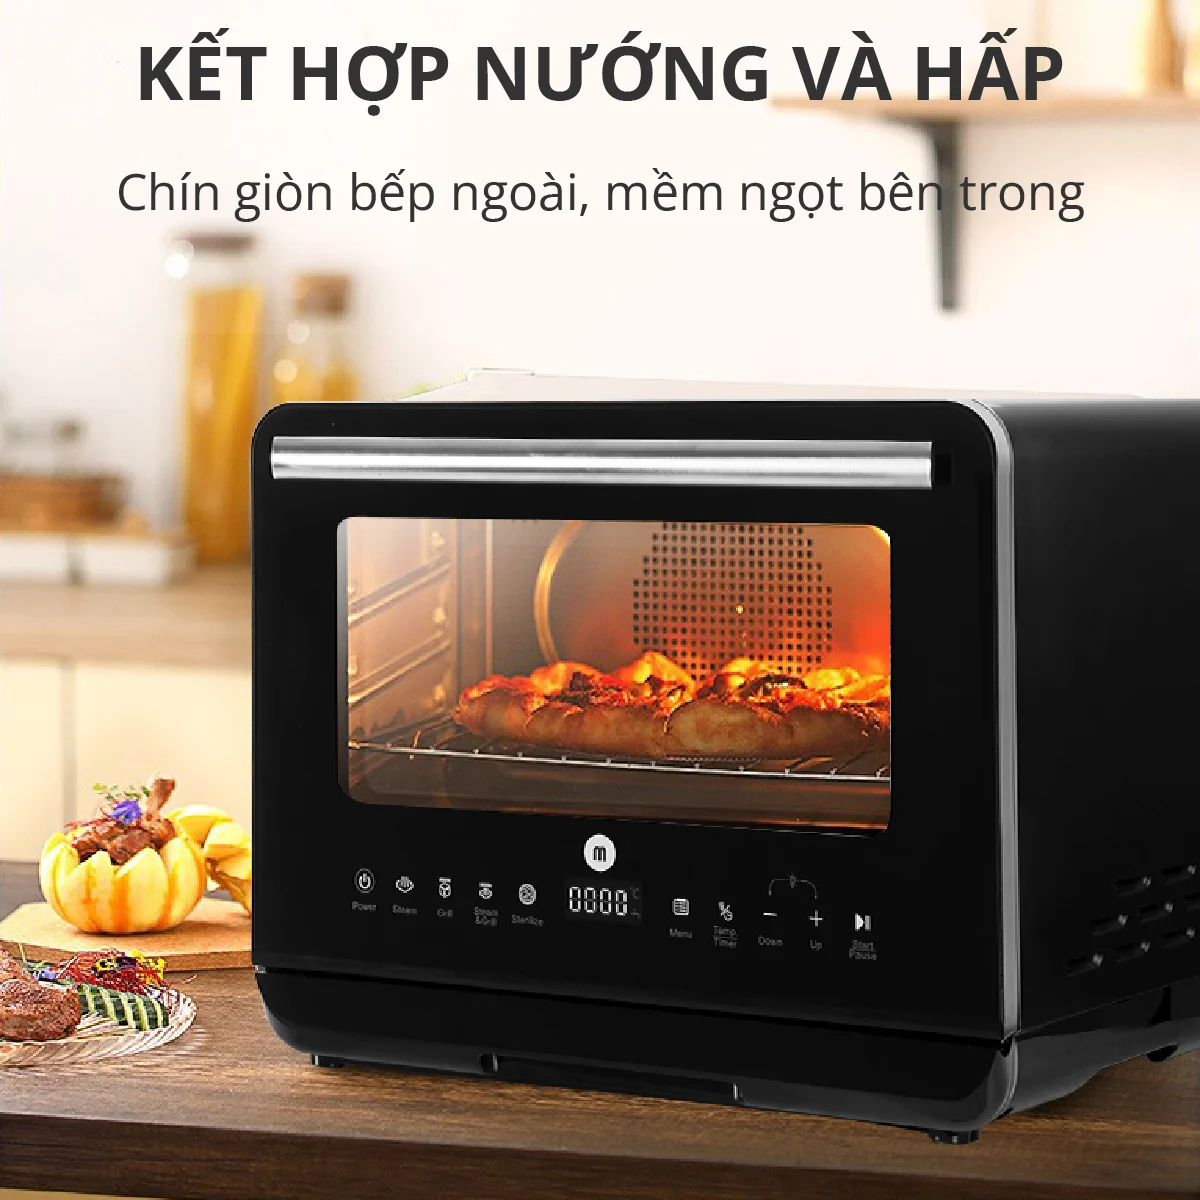 mochanstore.com Noi Chien khong dau Hoi Nuoc Mishio MK318 20l menu 50 chuc nang